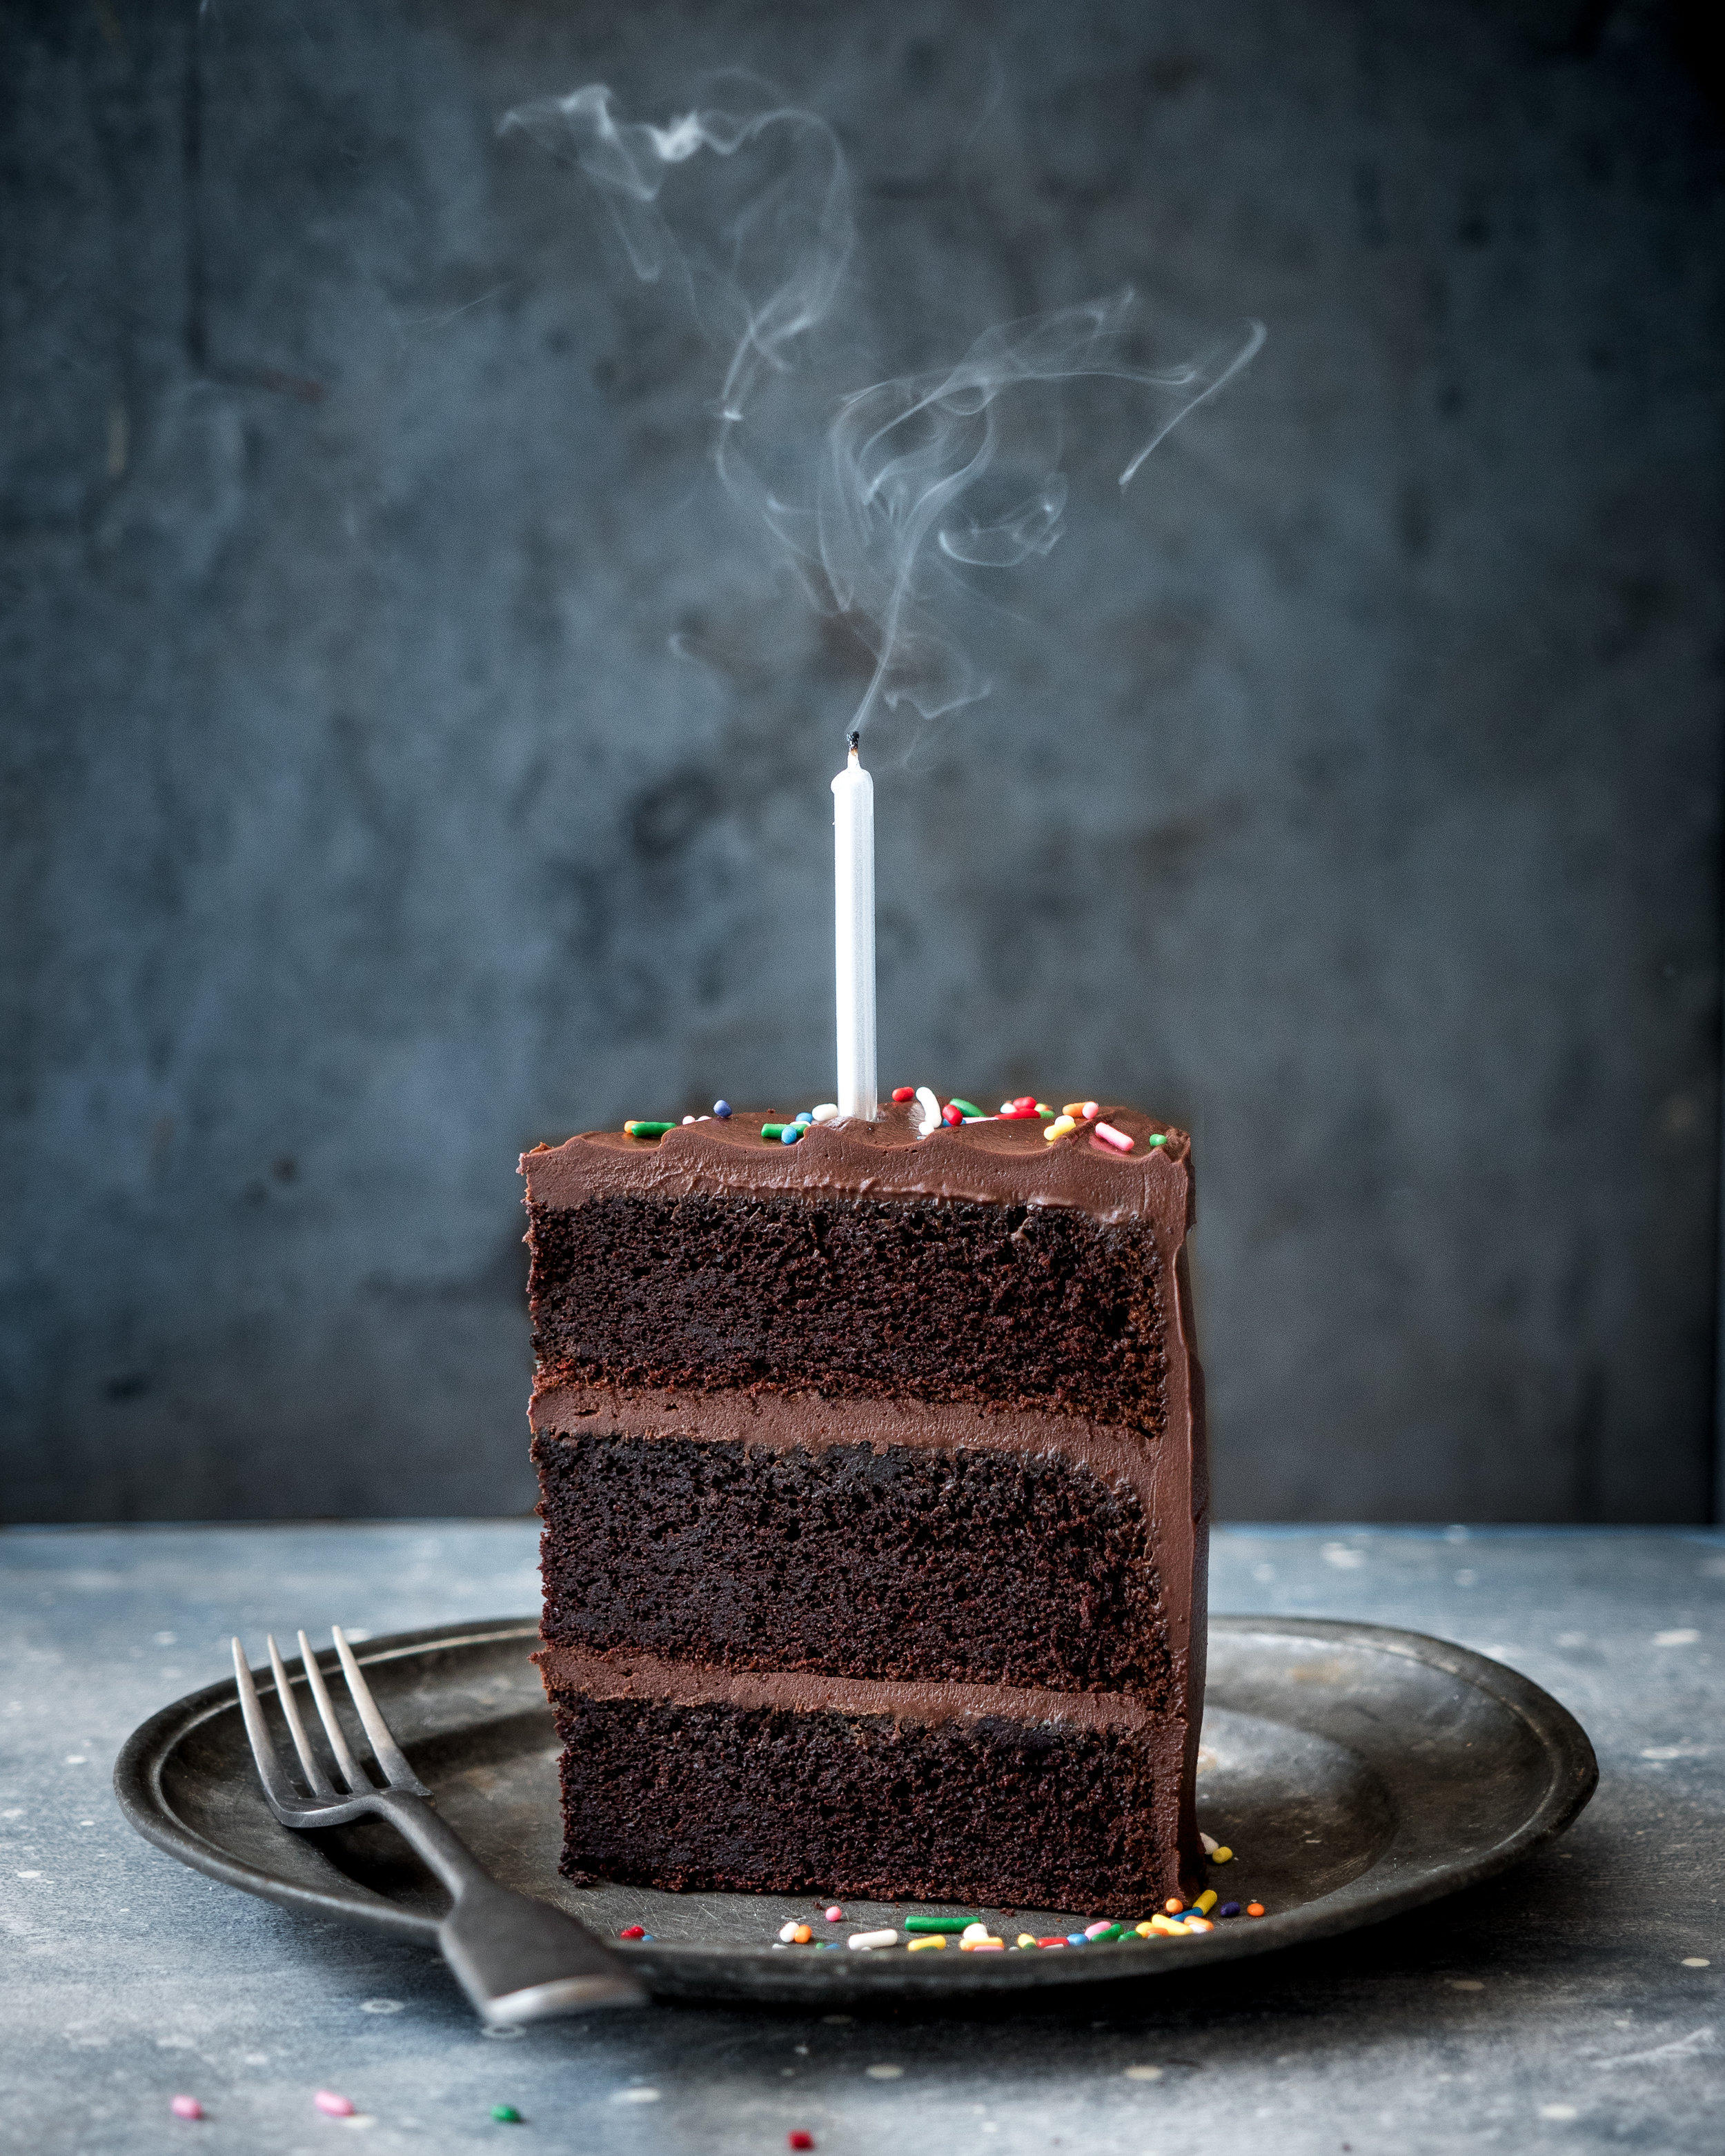 247700 Slice Of Cake Stock Photos Pictures  RoyaltyFree Images   iStock  Cake Birthday cake Cupcake